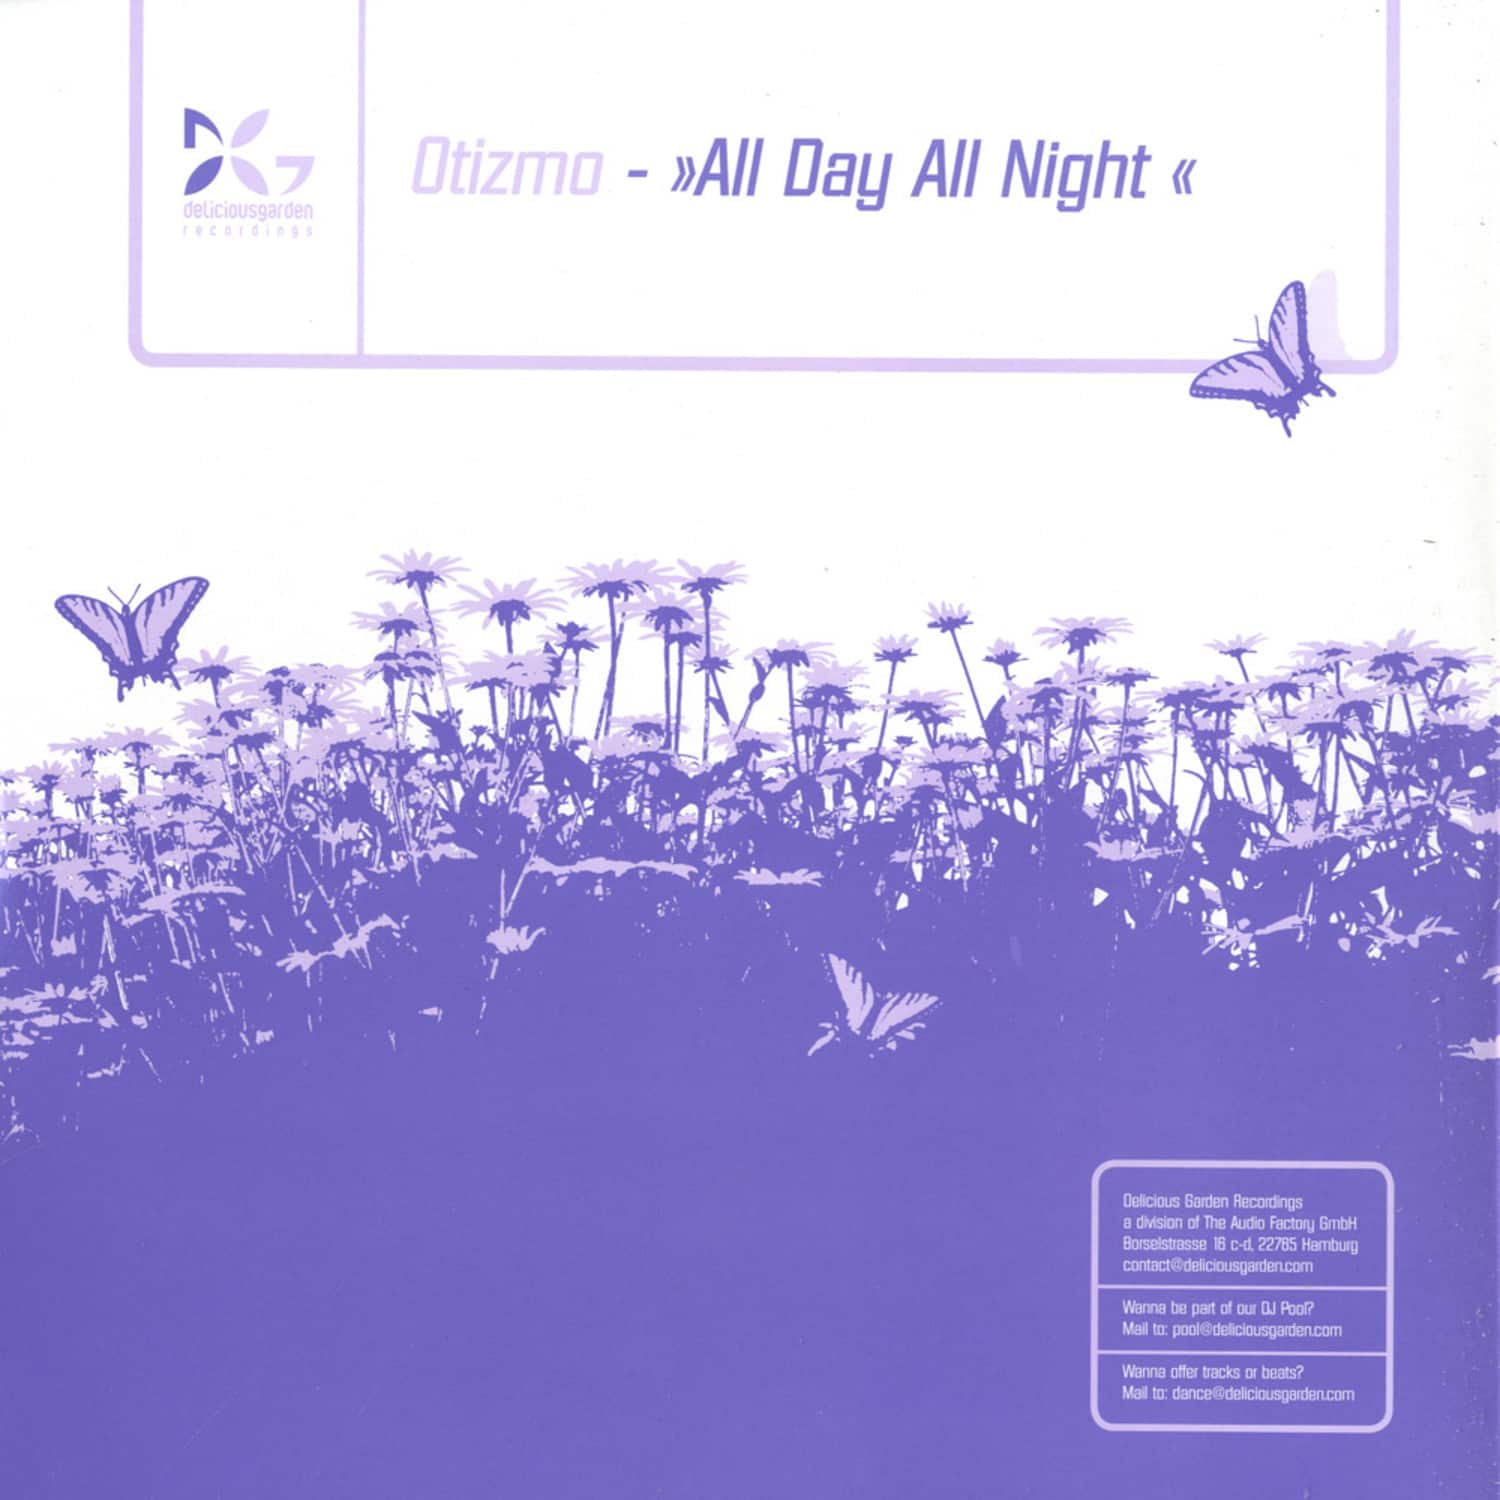 Otizmo - ALL DAY ALL NIGHT